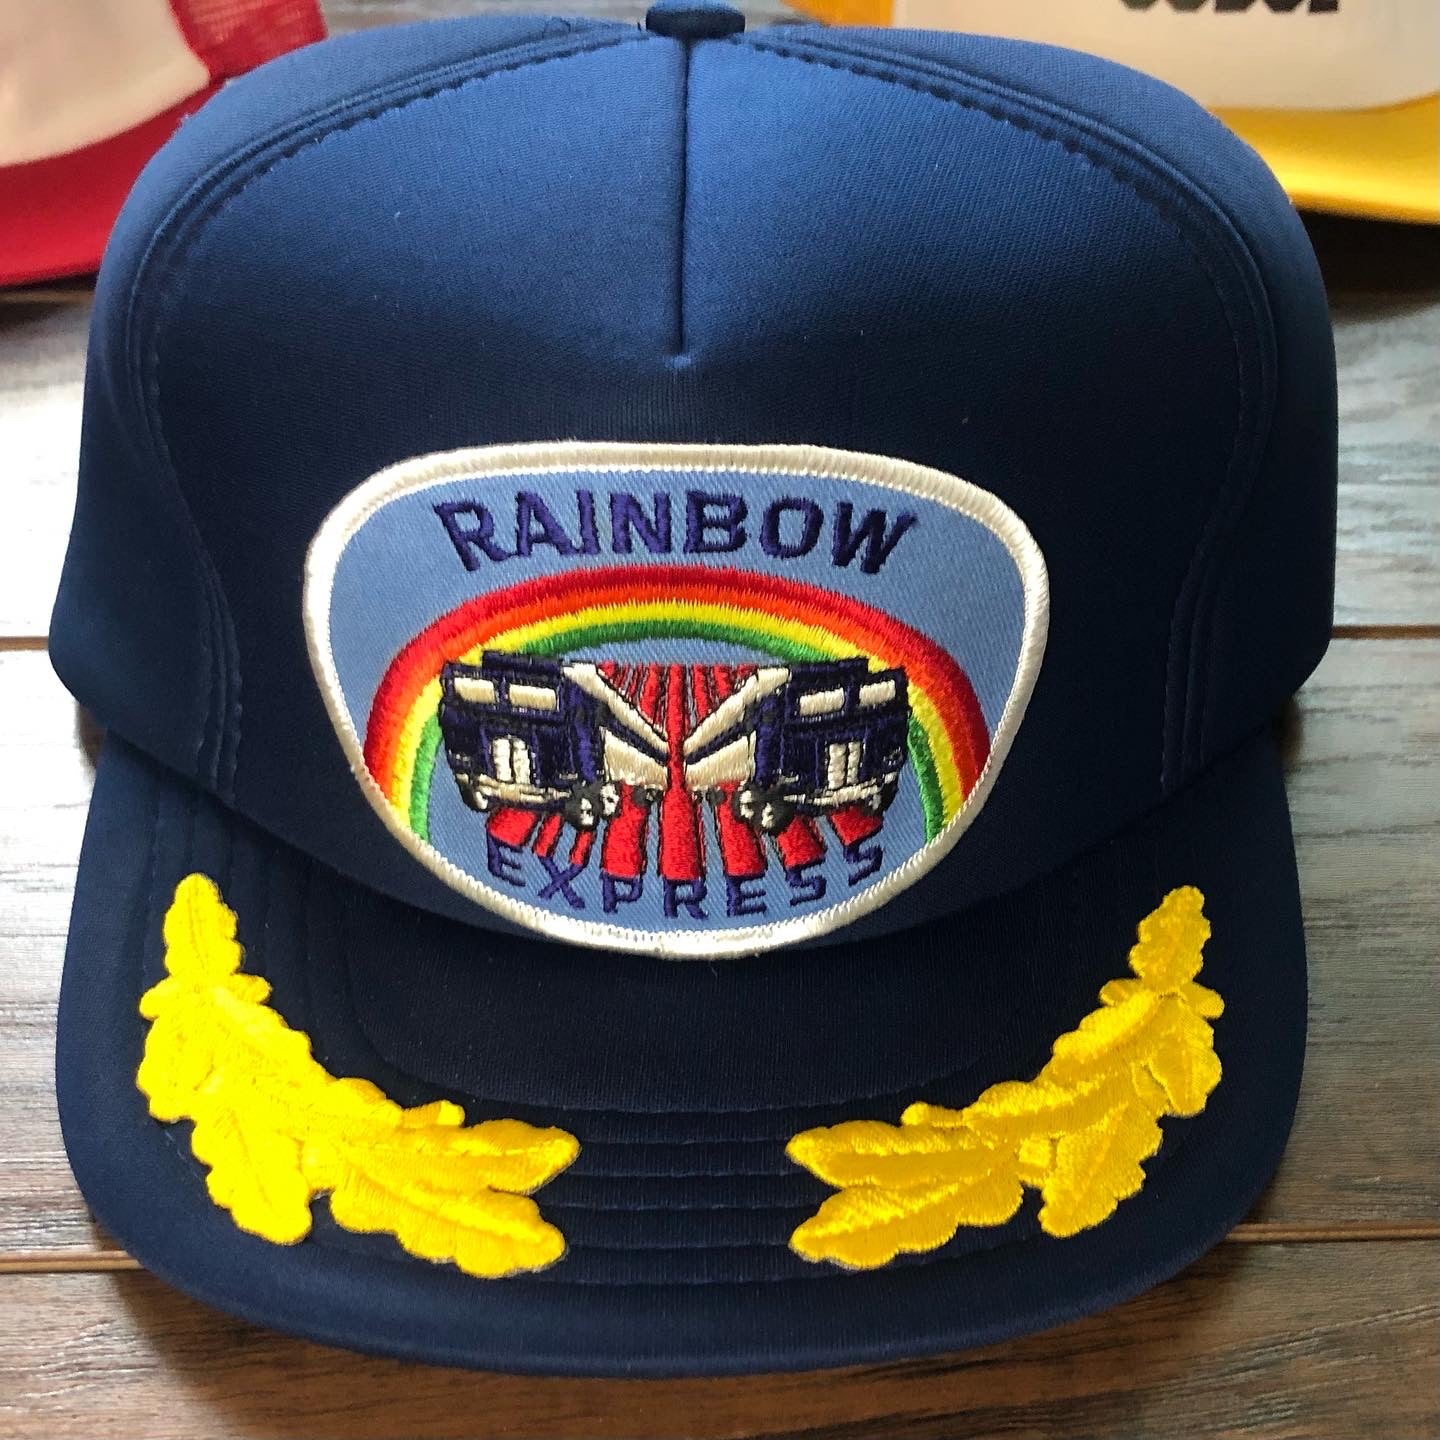 Vintage Rainbow Express Snapback Hat with Oak Leaf Embellishments